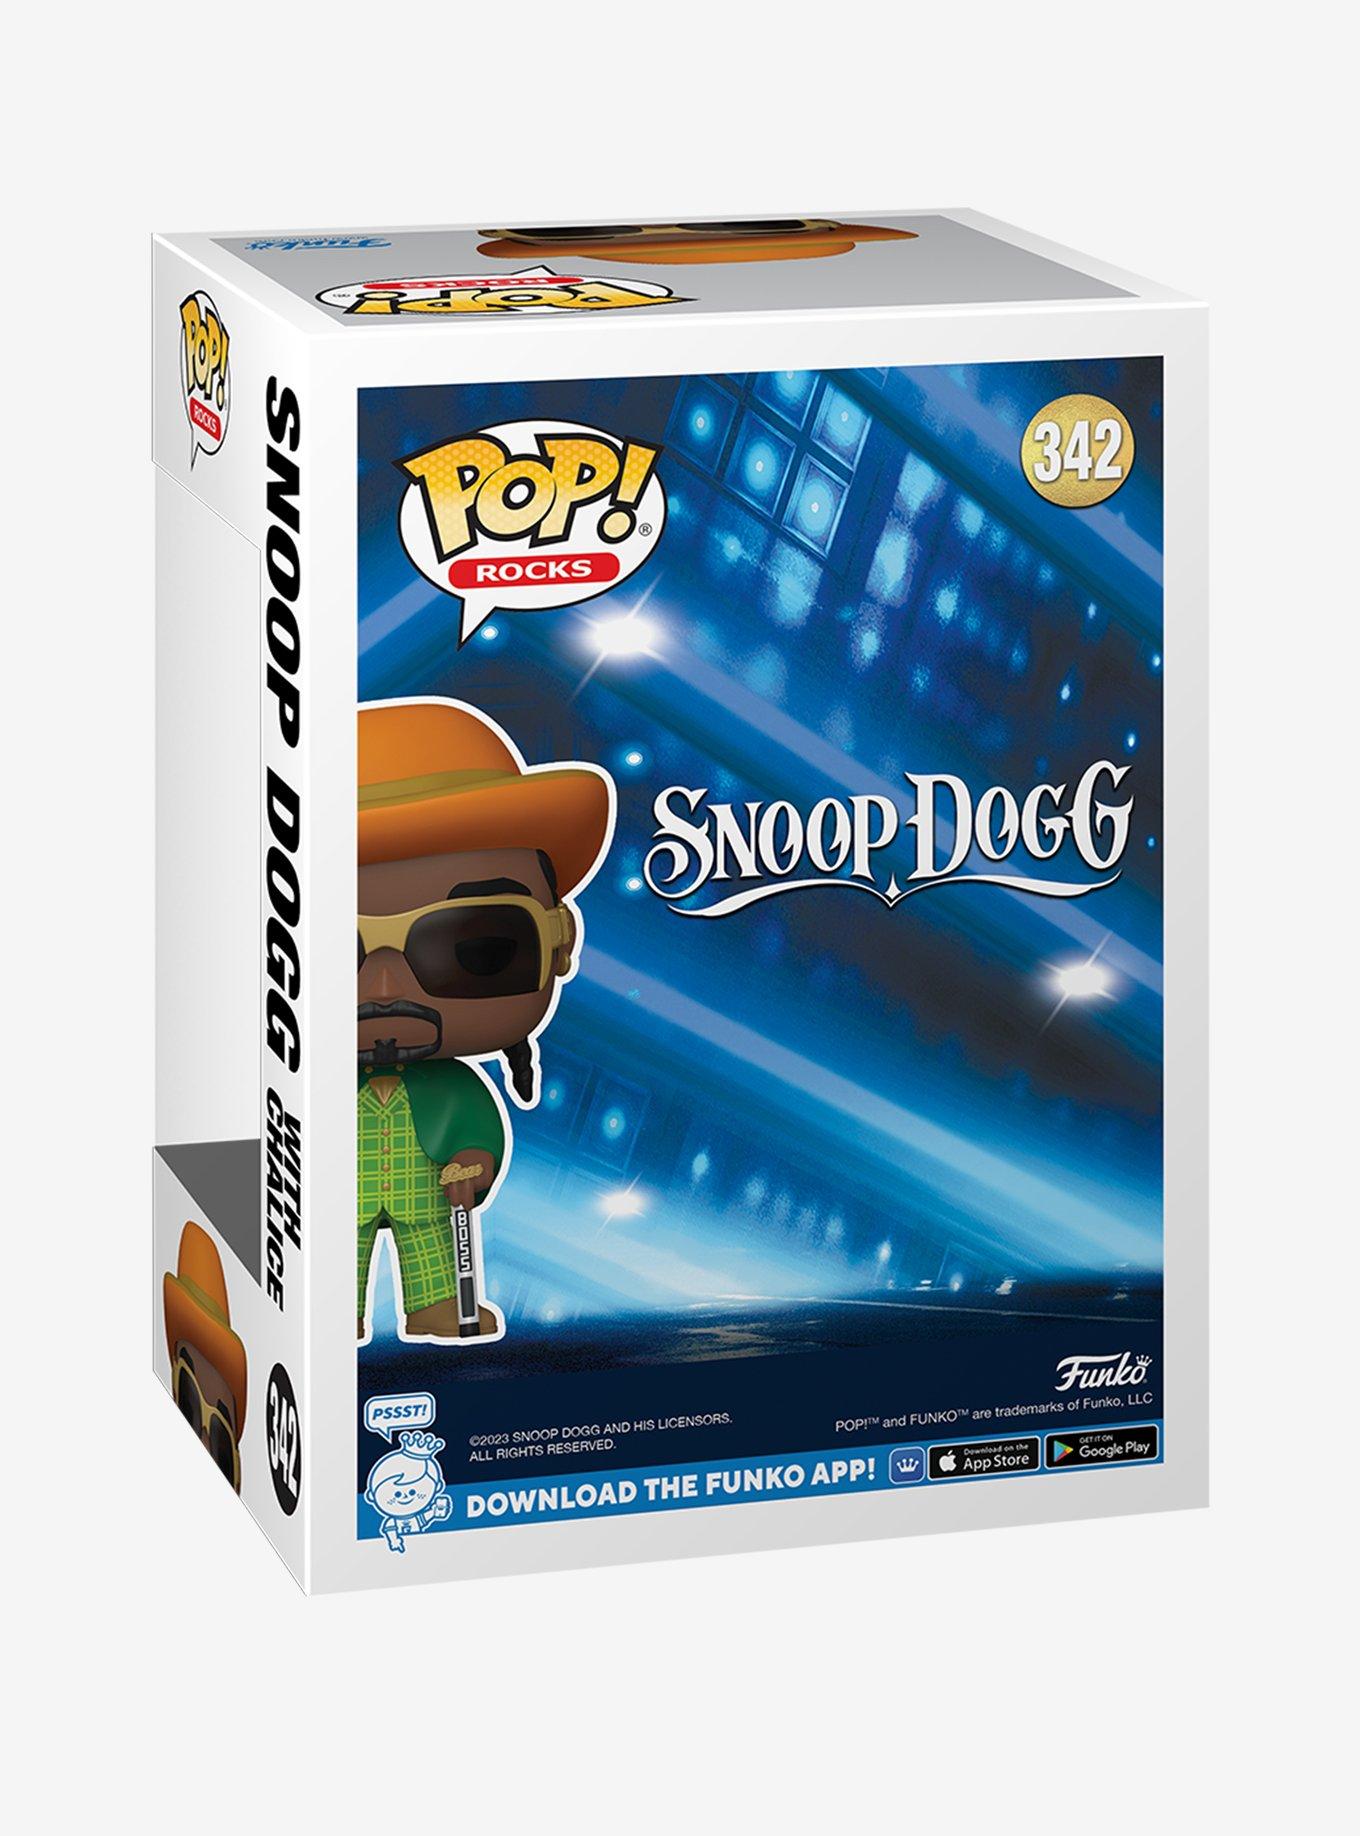 Funko Snoop Dogg Pop! Rocks Snoop Dogg With Chalice Vinyl Figure